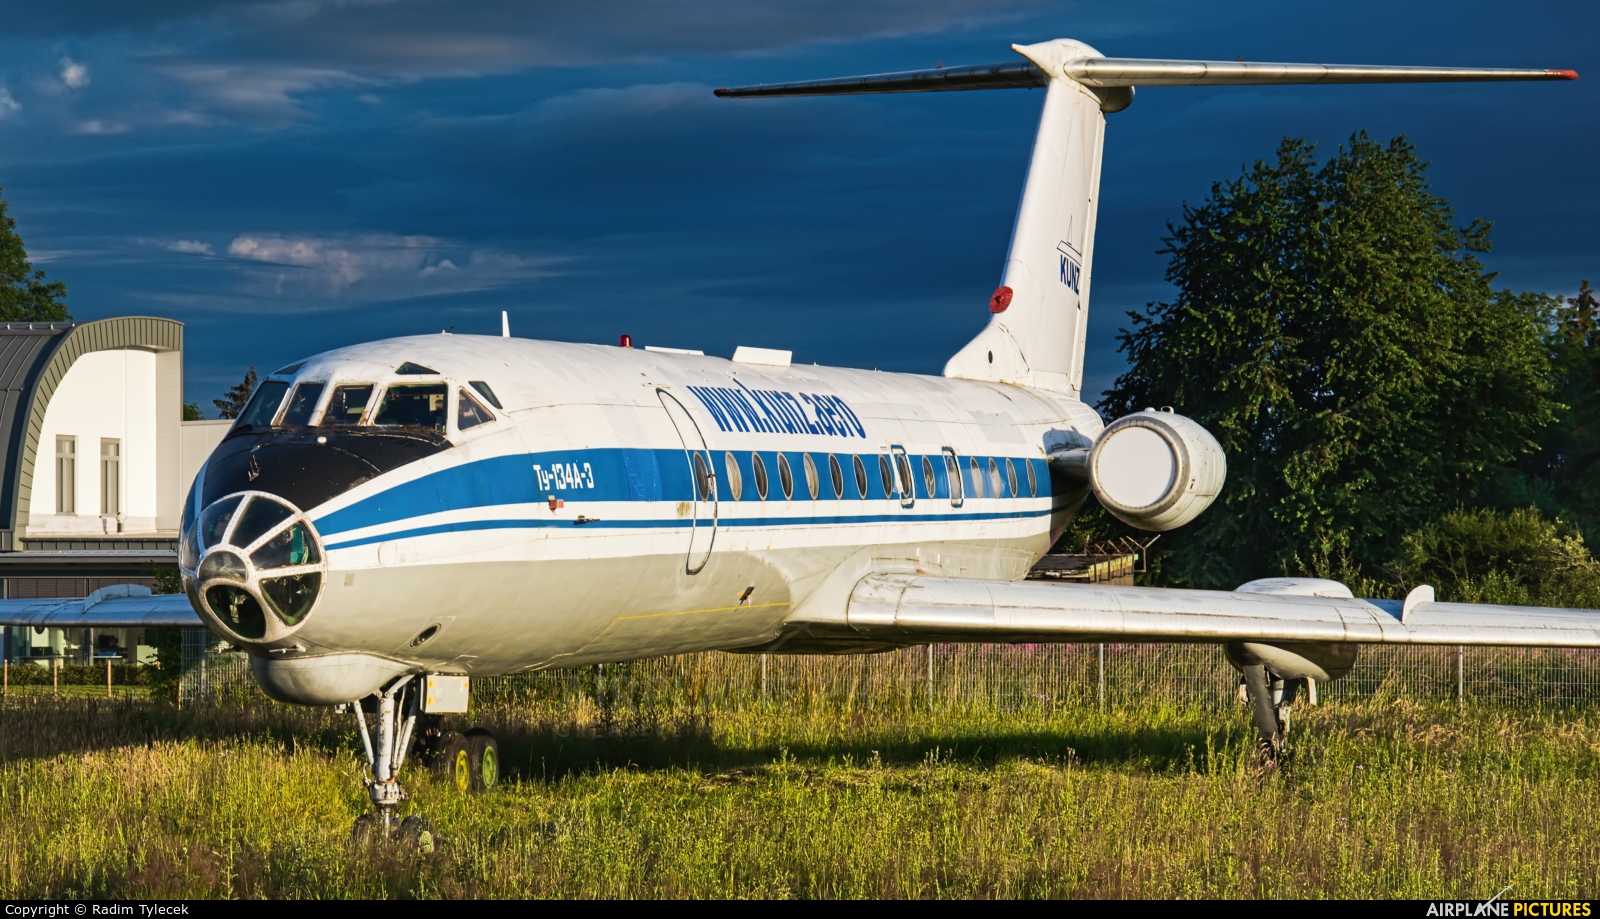 Orenburg Airlines RA-65117 aircraft at Off Airport - Germany